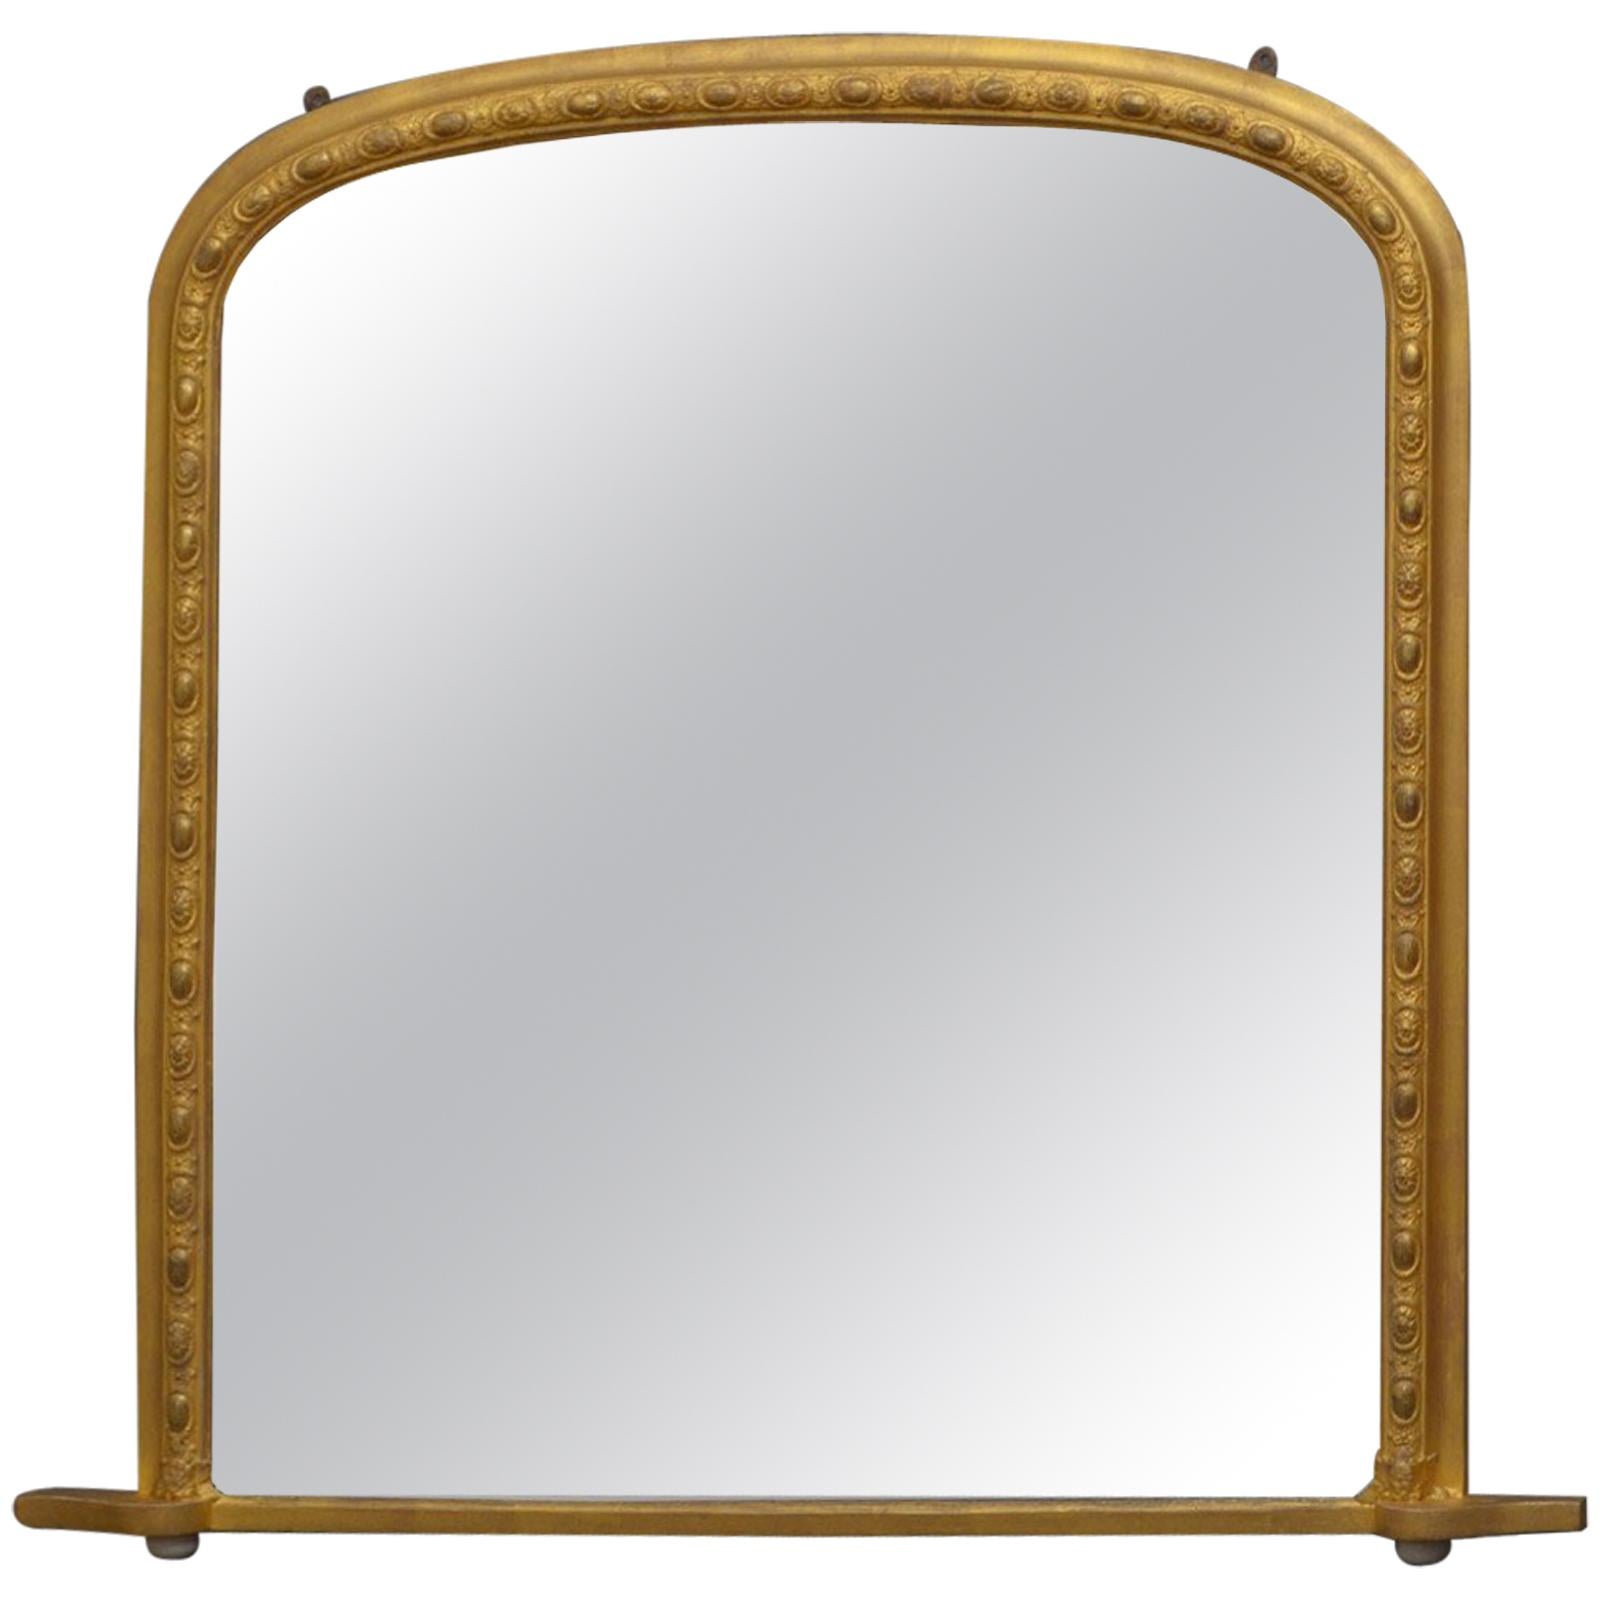 Victorian Gilded Overmantel Mirror